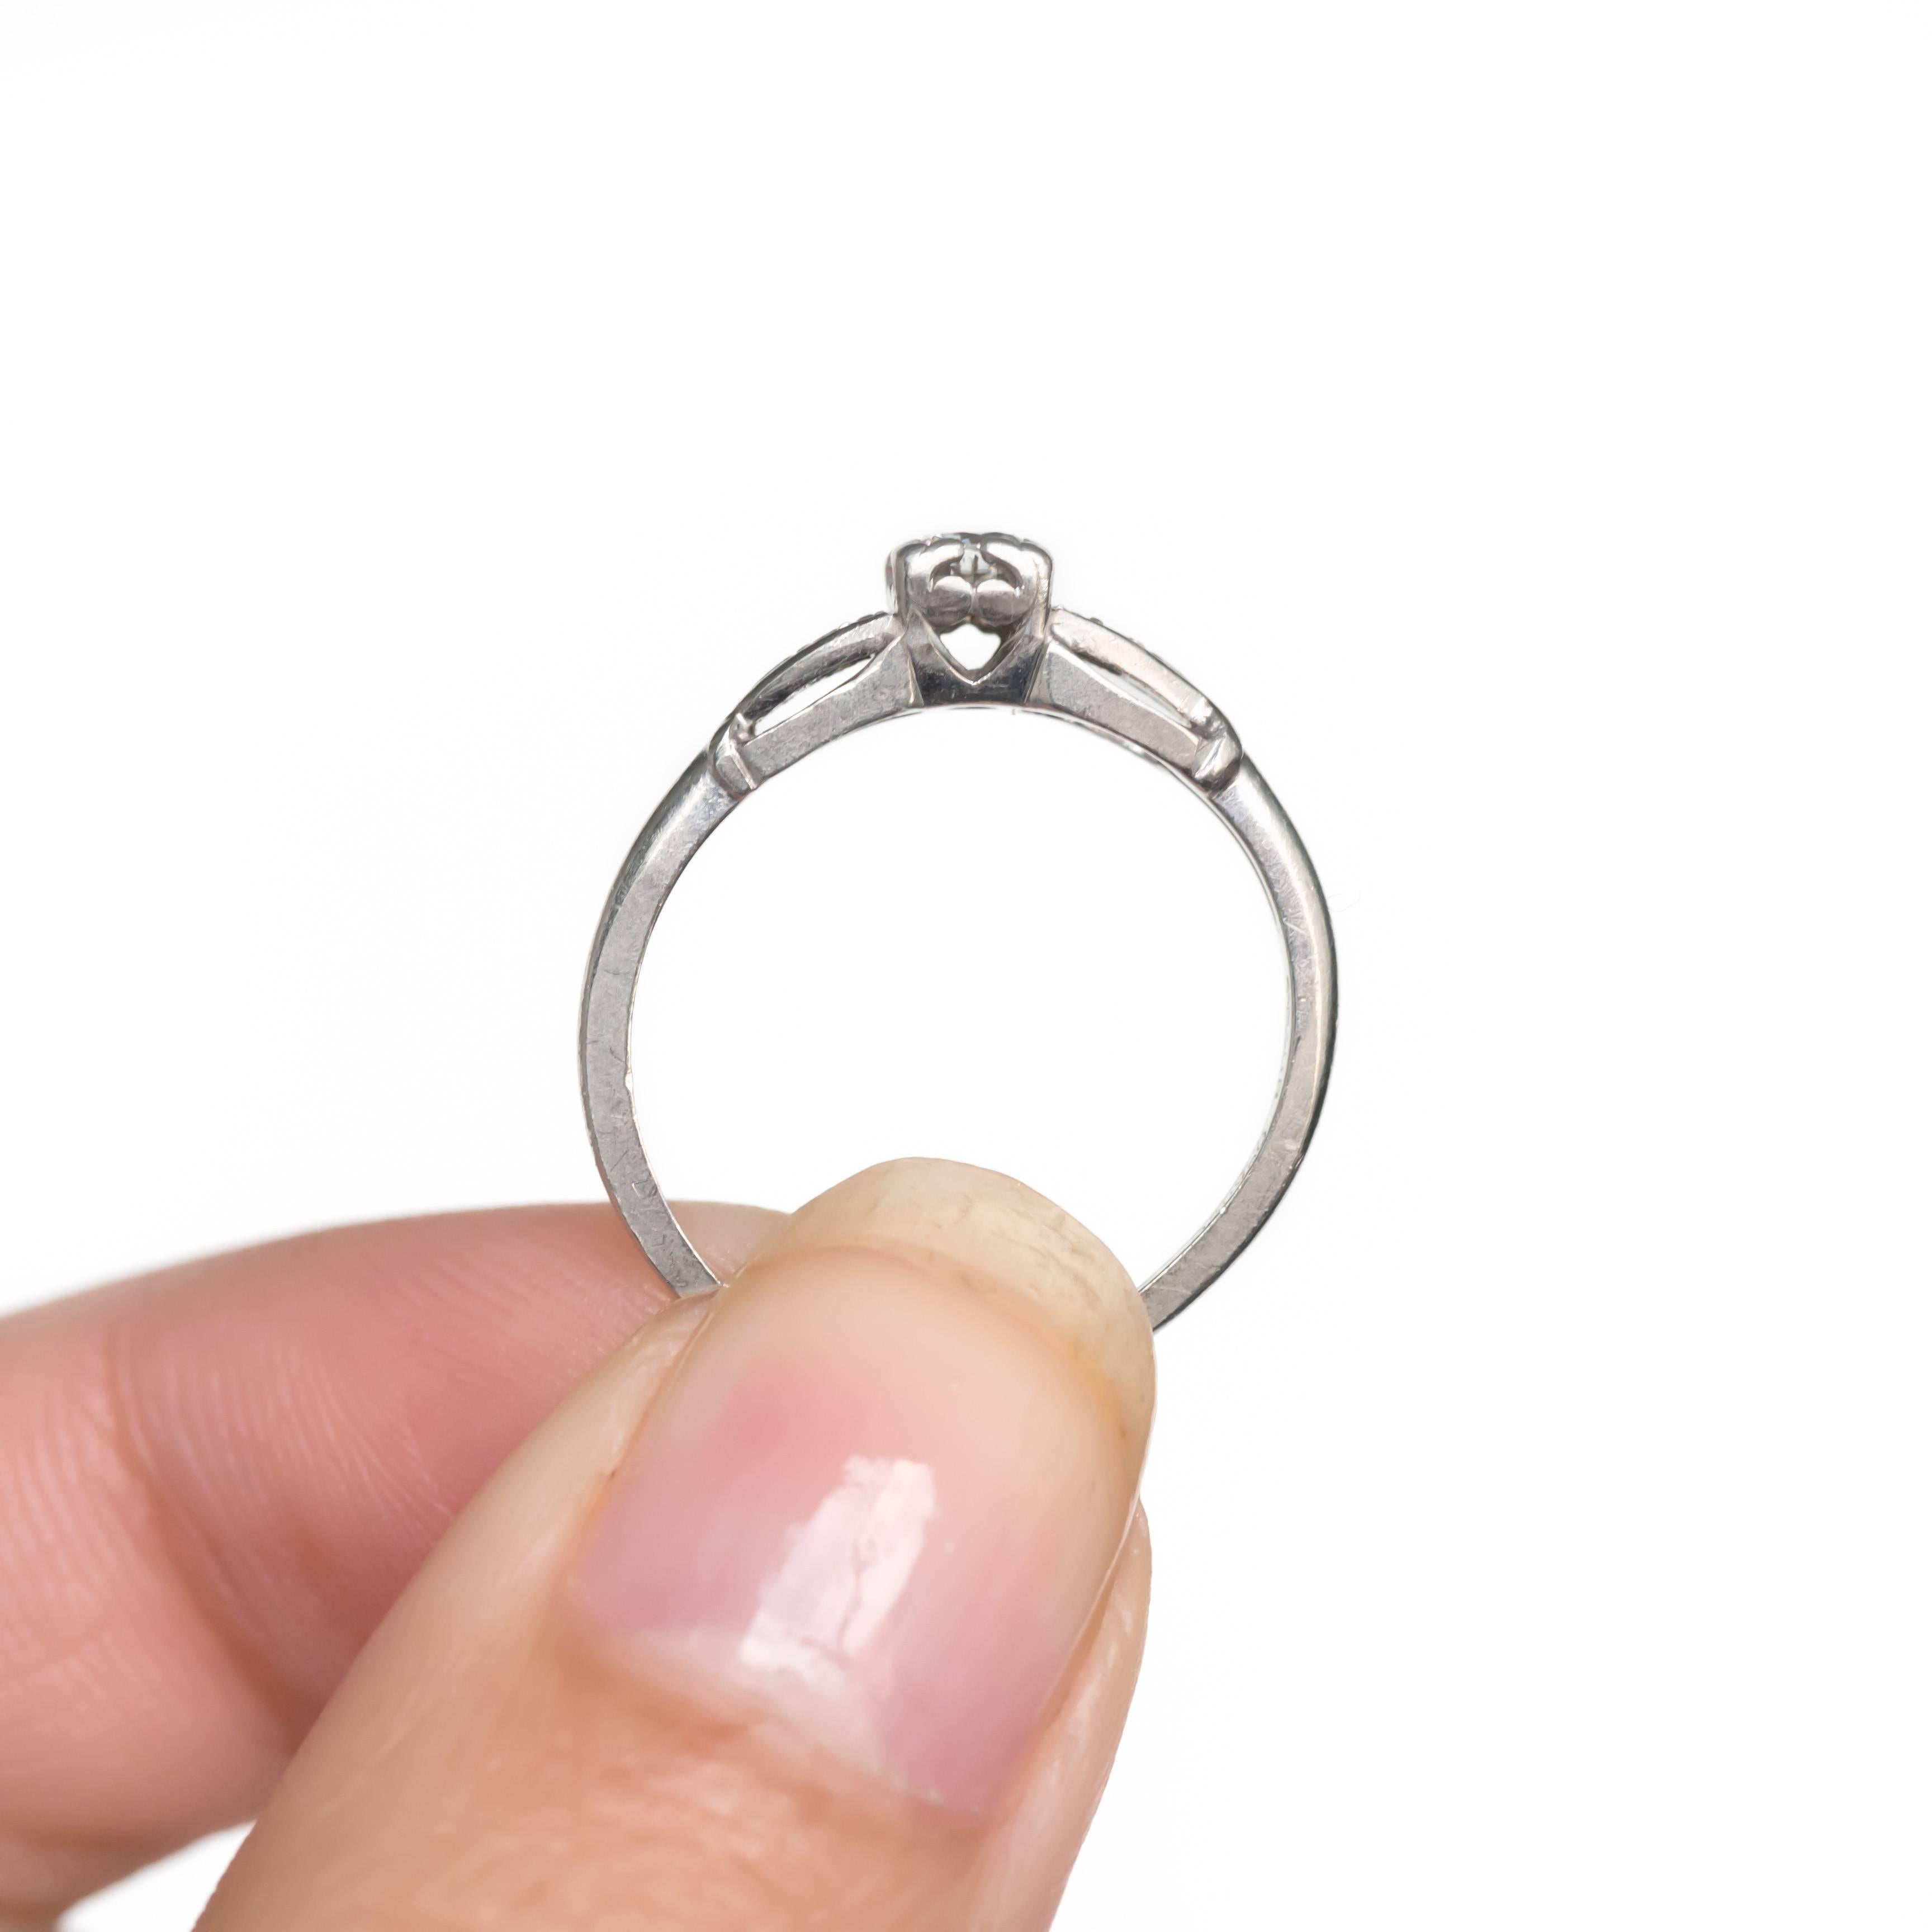 10 carat diamond ring for sale